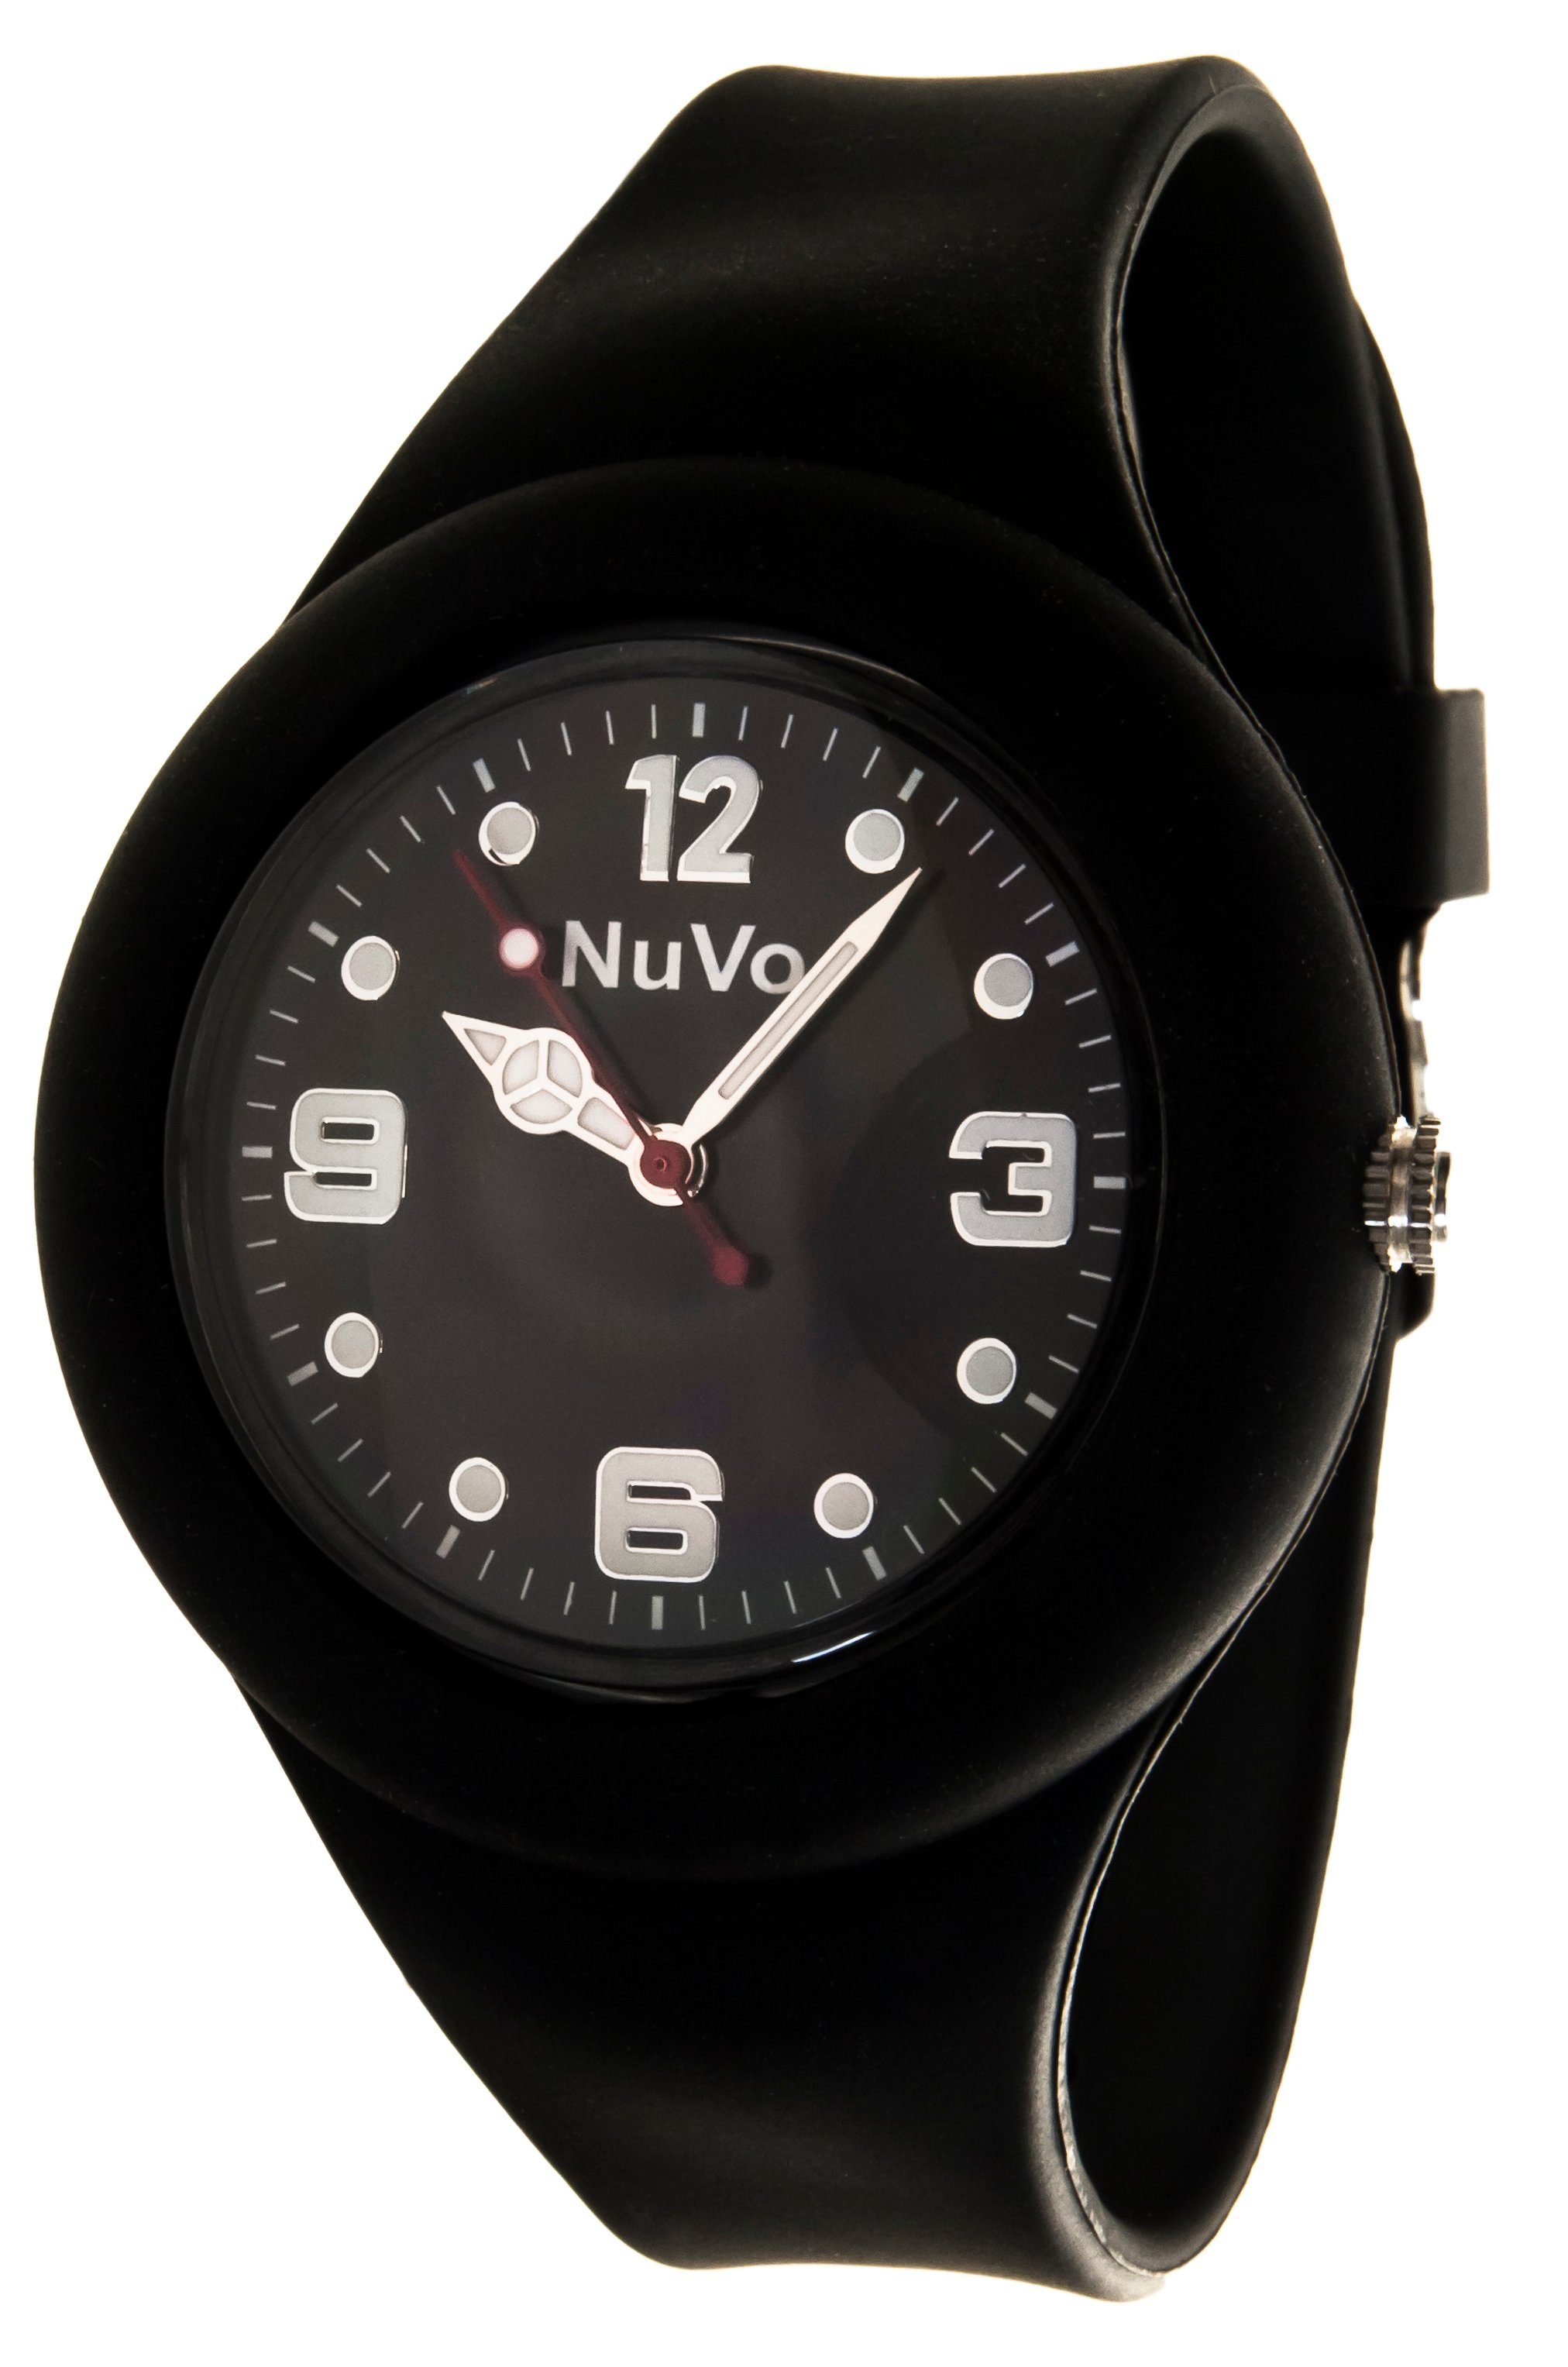 Nuvo Quarzuhr Sportliche Unisex Armbanduhr mit Silikonarmband